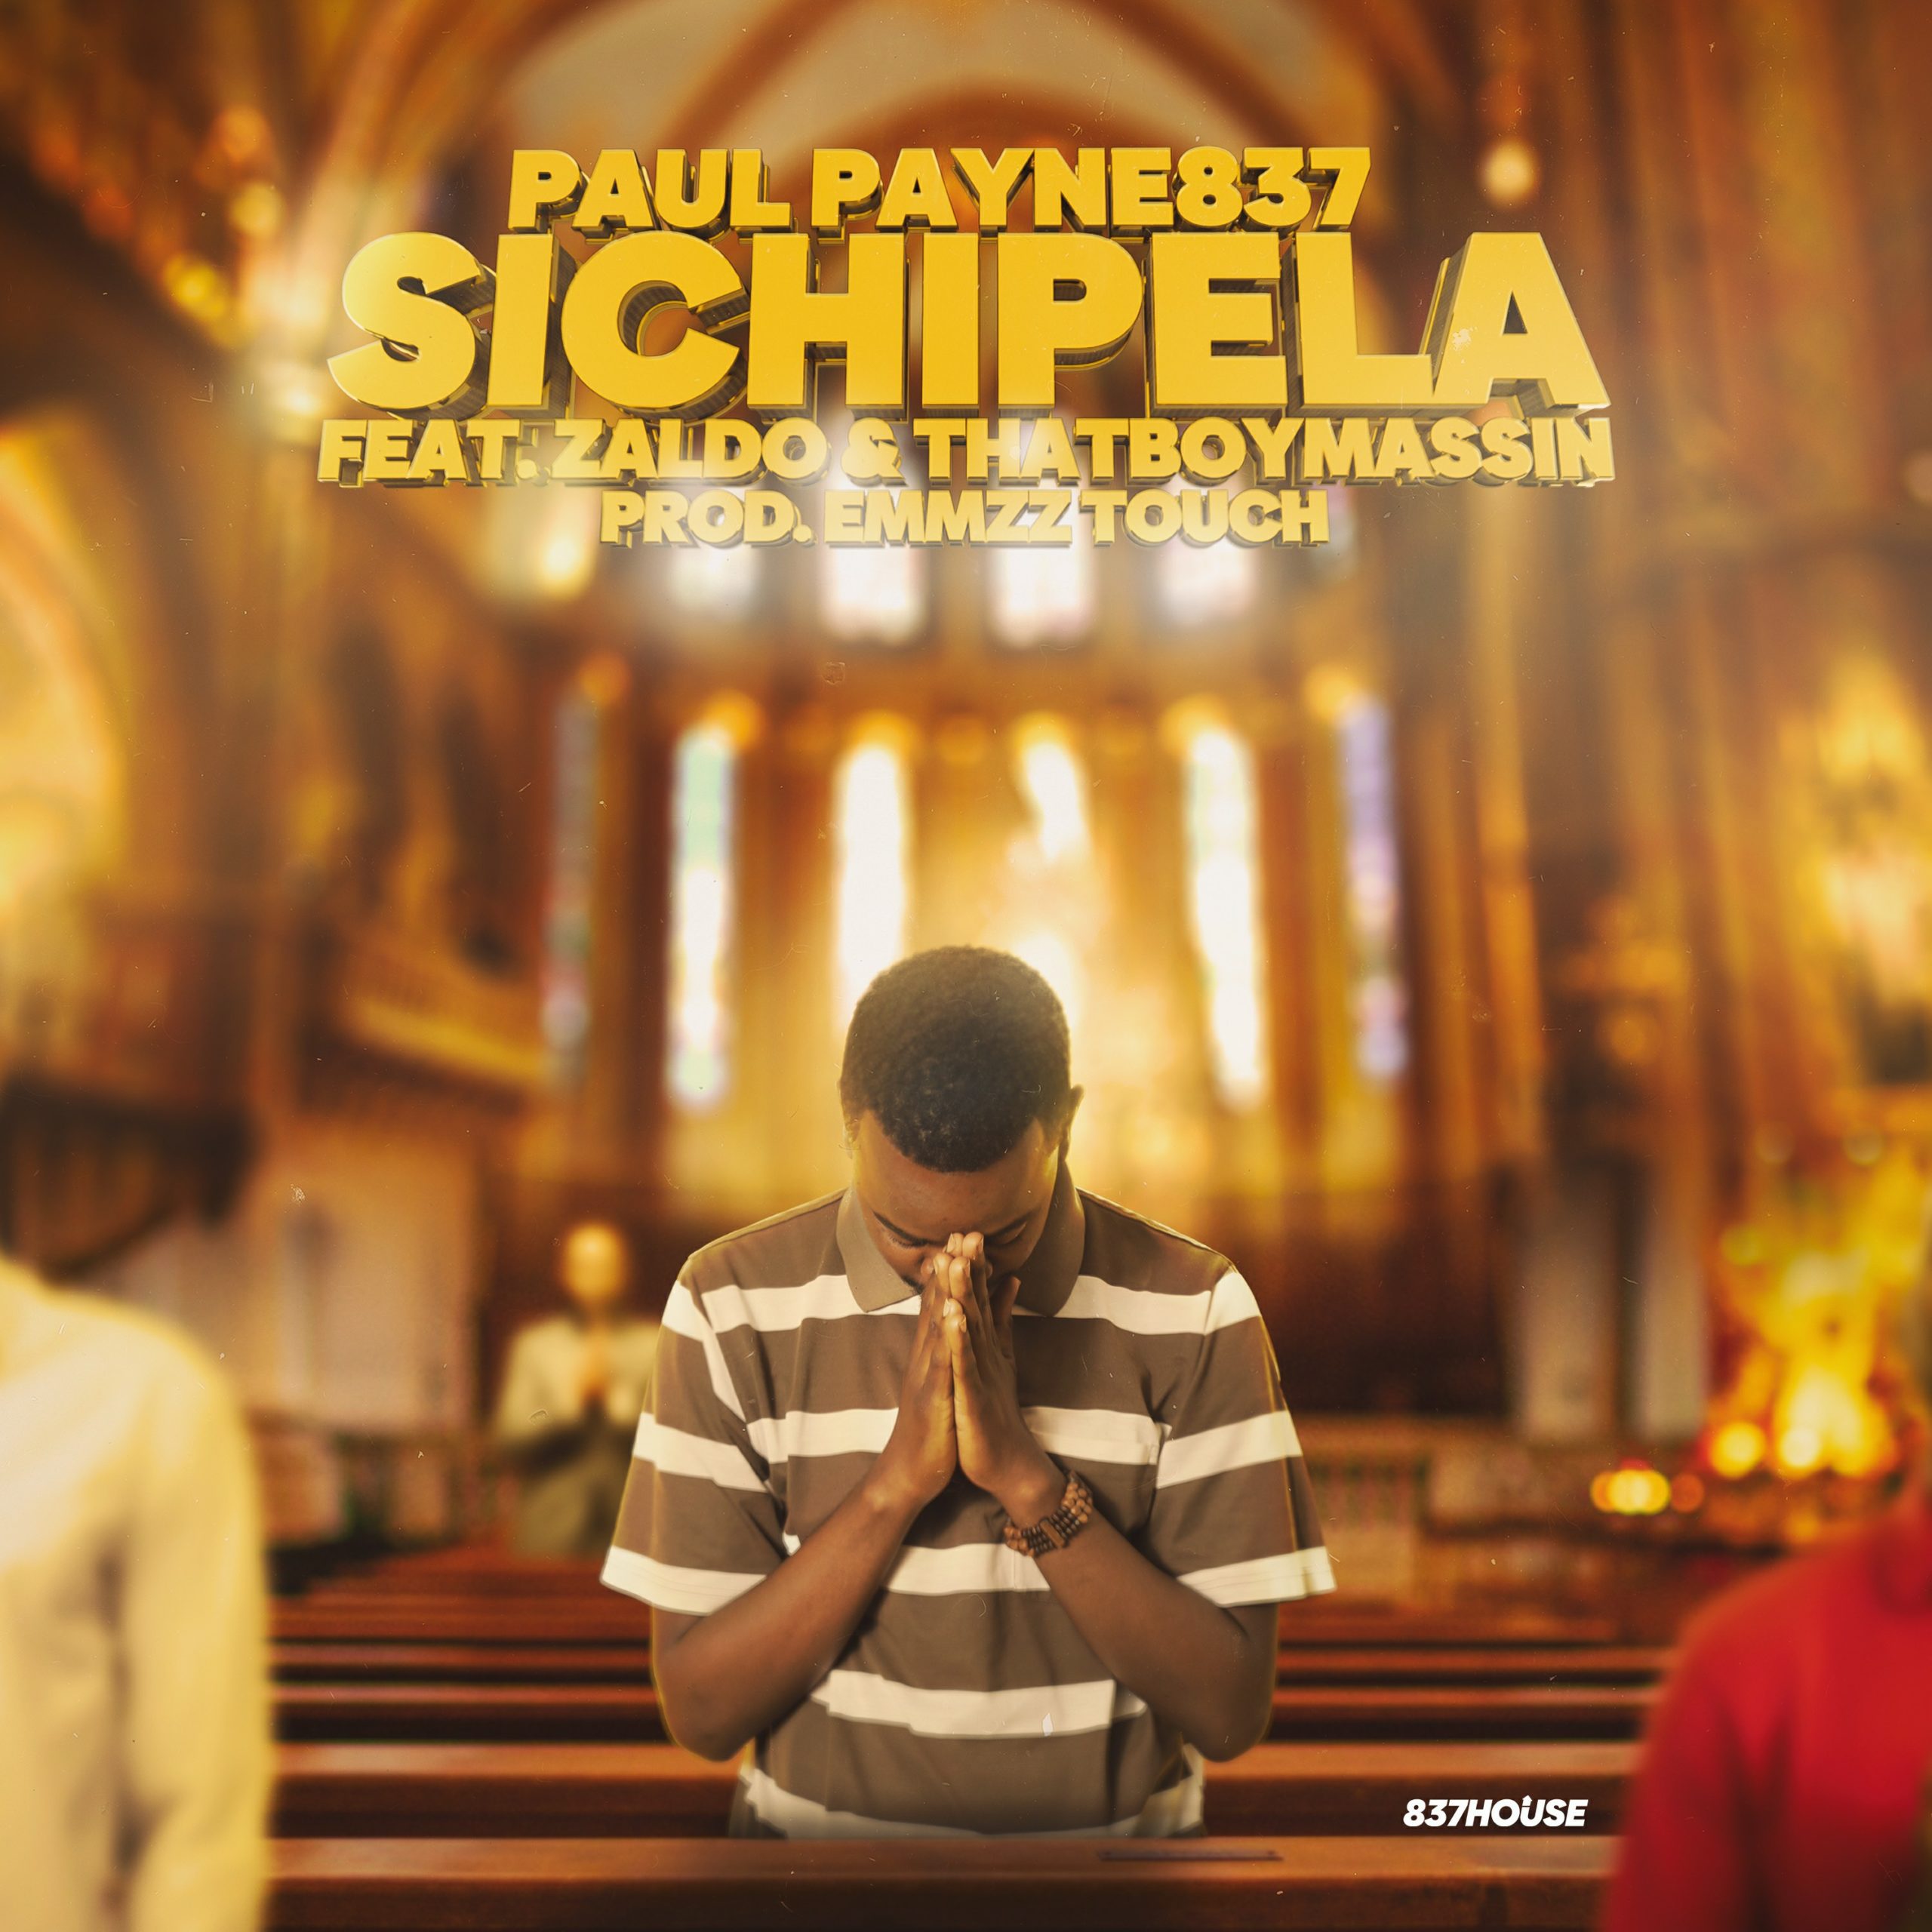 Download Paul Payne837 ft. Zaldo & Thatboymassin - "Sichipela mP3